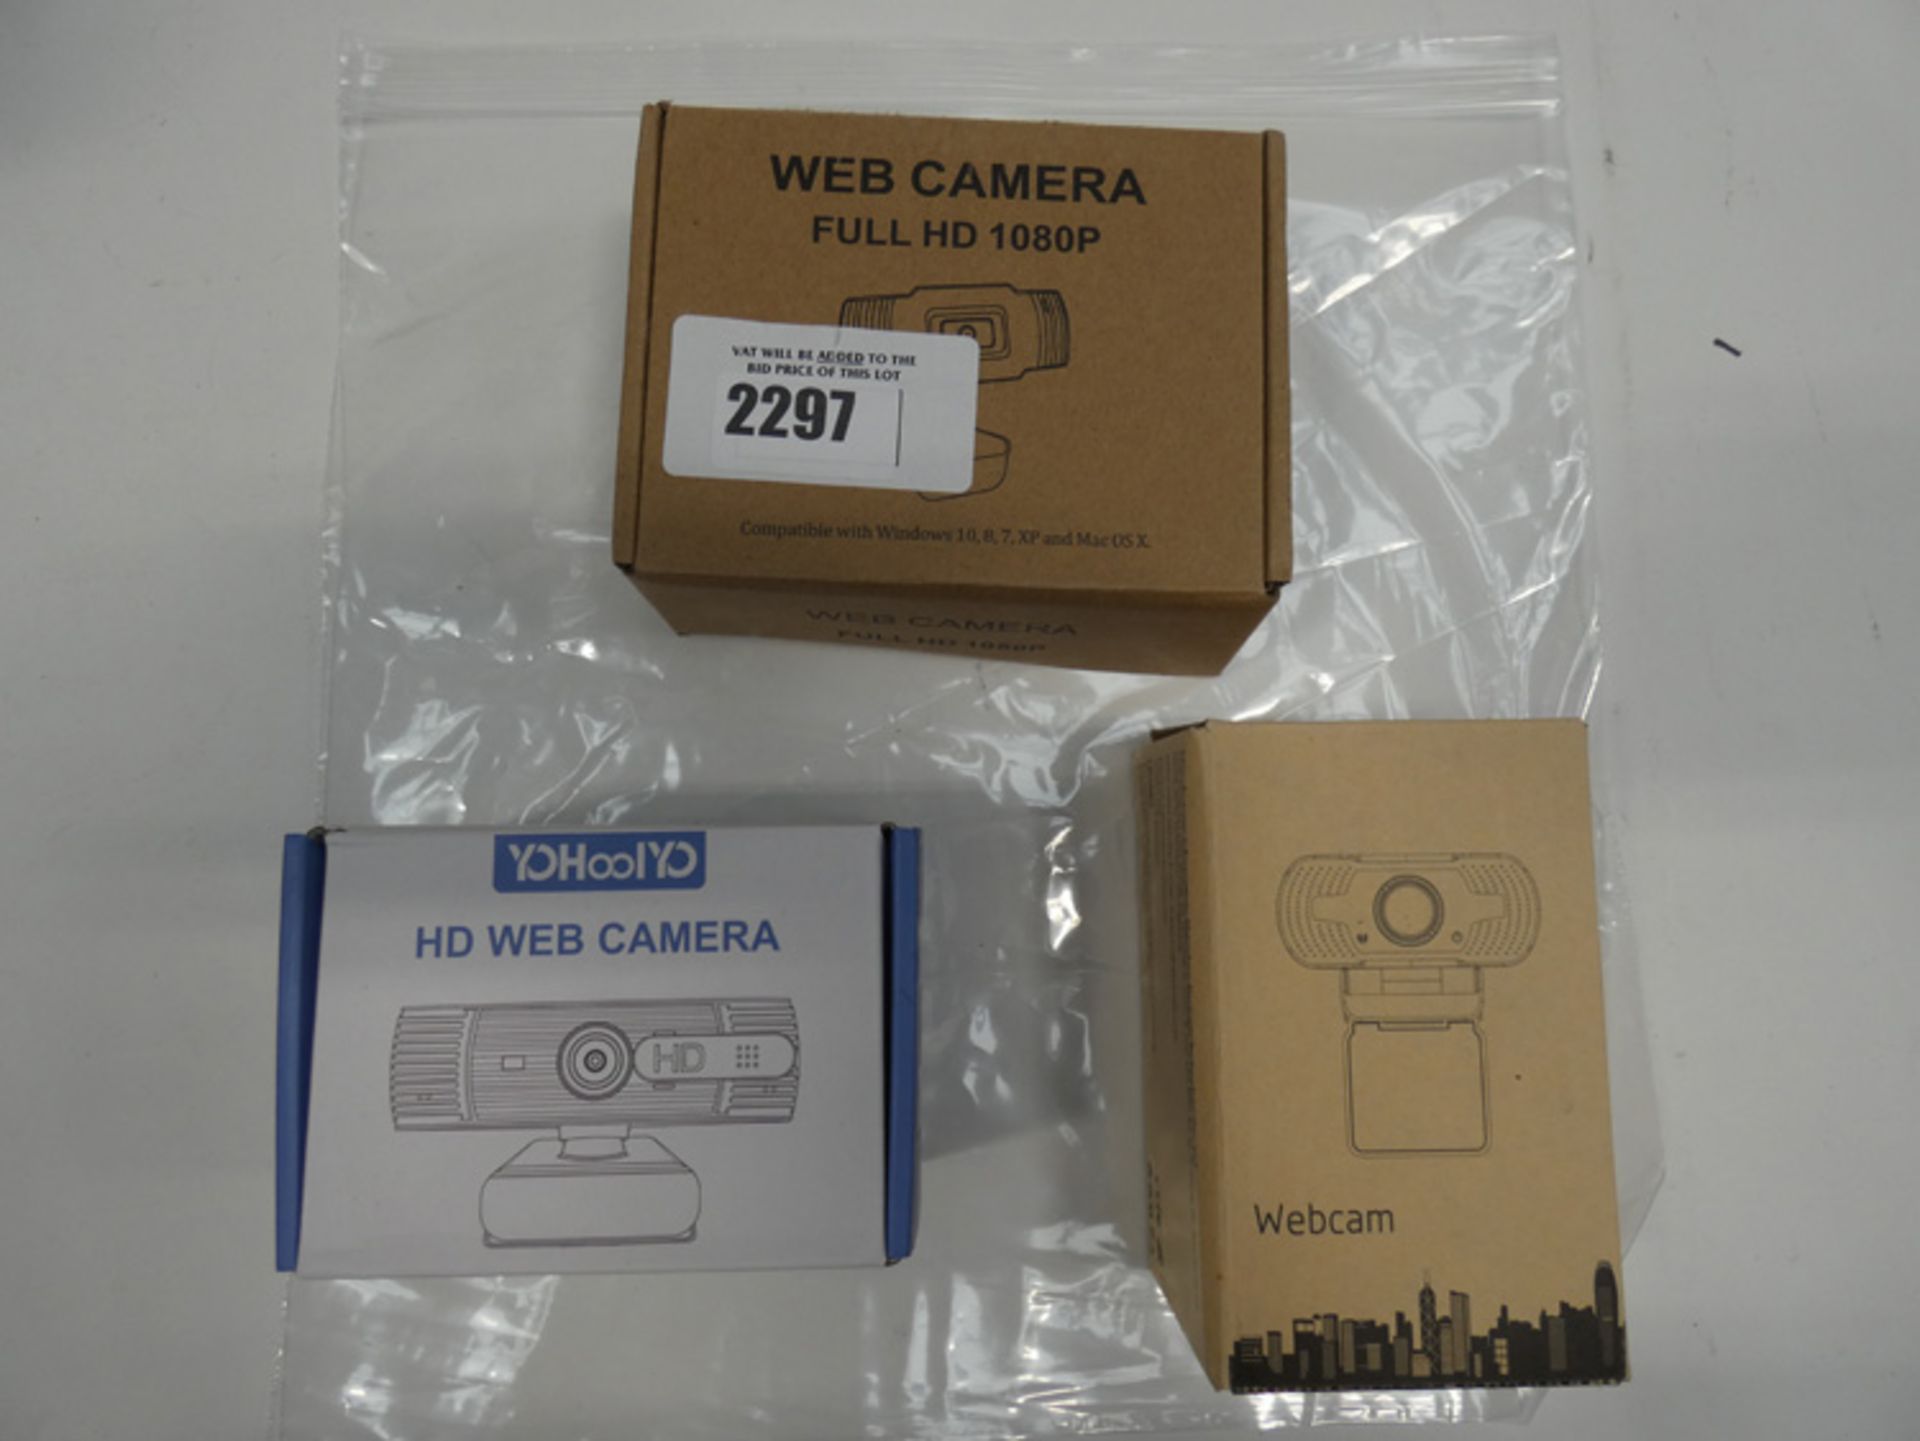 3x HD webcams